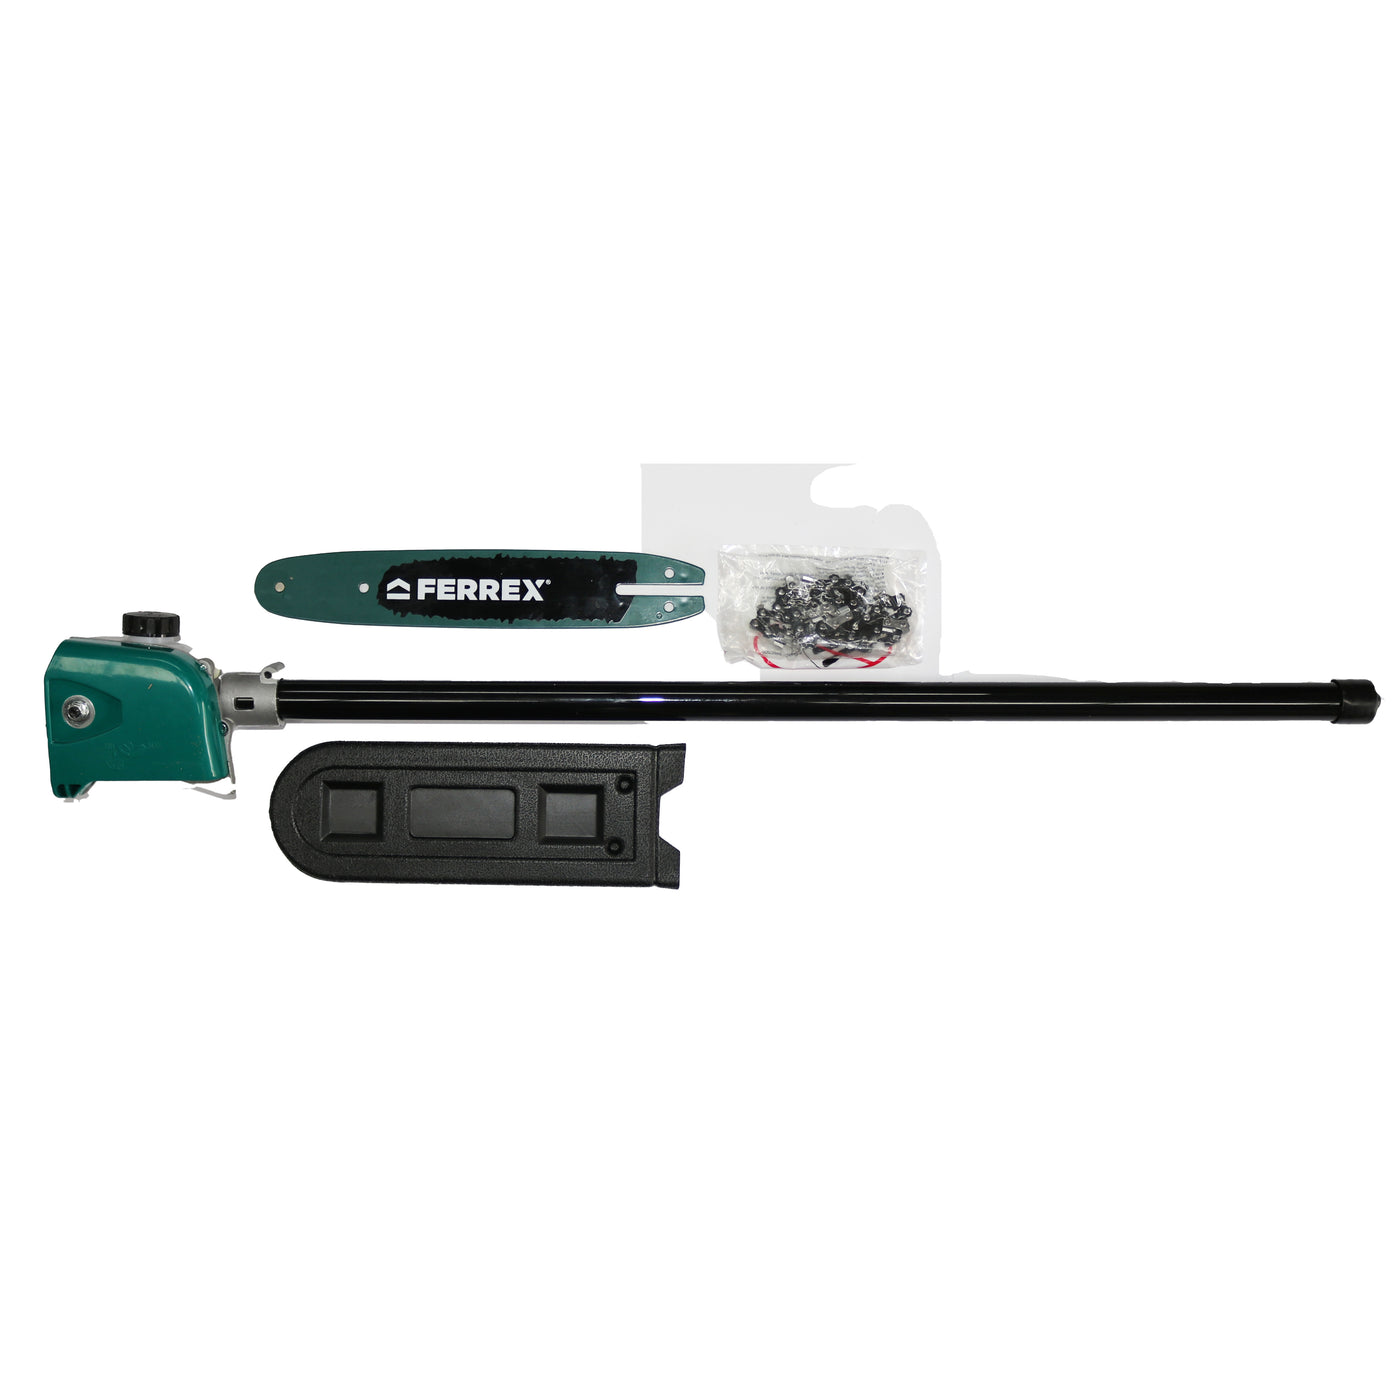 Aldi Gardenline/Ferrex 2-Stroke 6-IN-1 (700305) Multi Garden Tool Chainsaw Attachment Kit